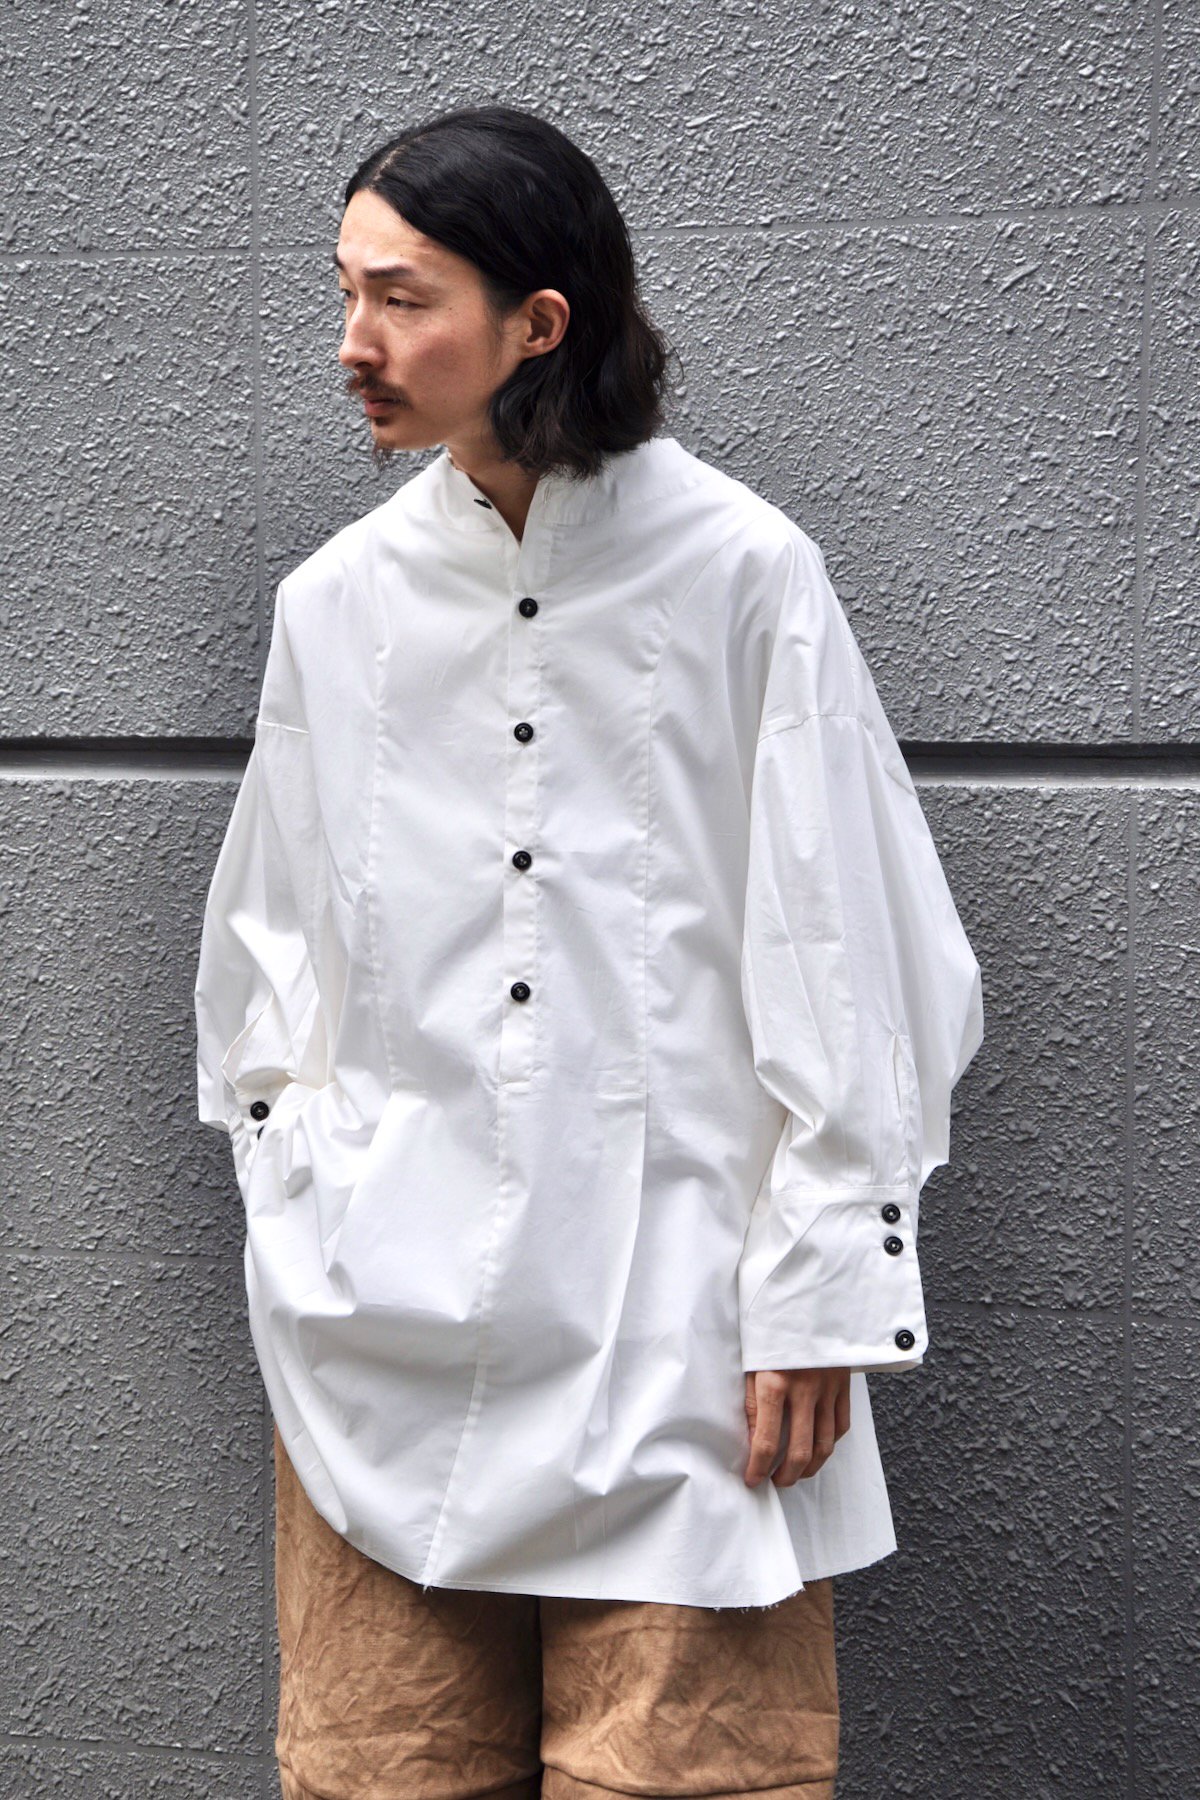 Tiscar Espadas / The Long Shirt / White